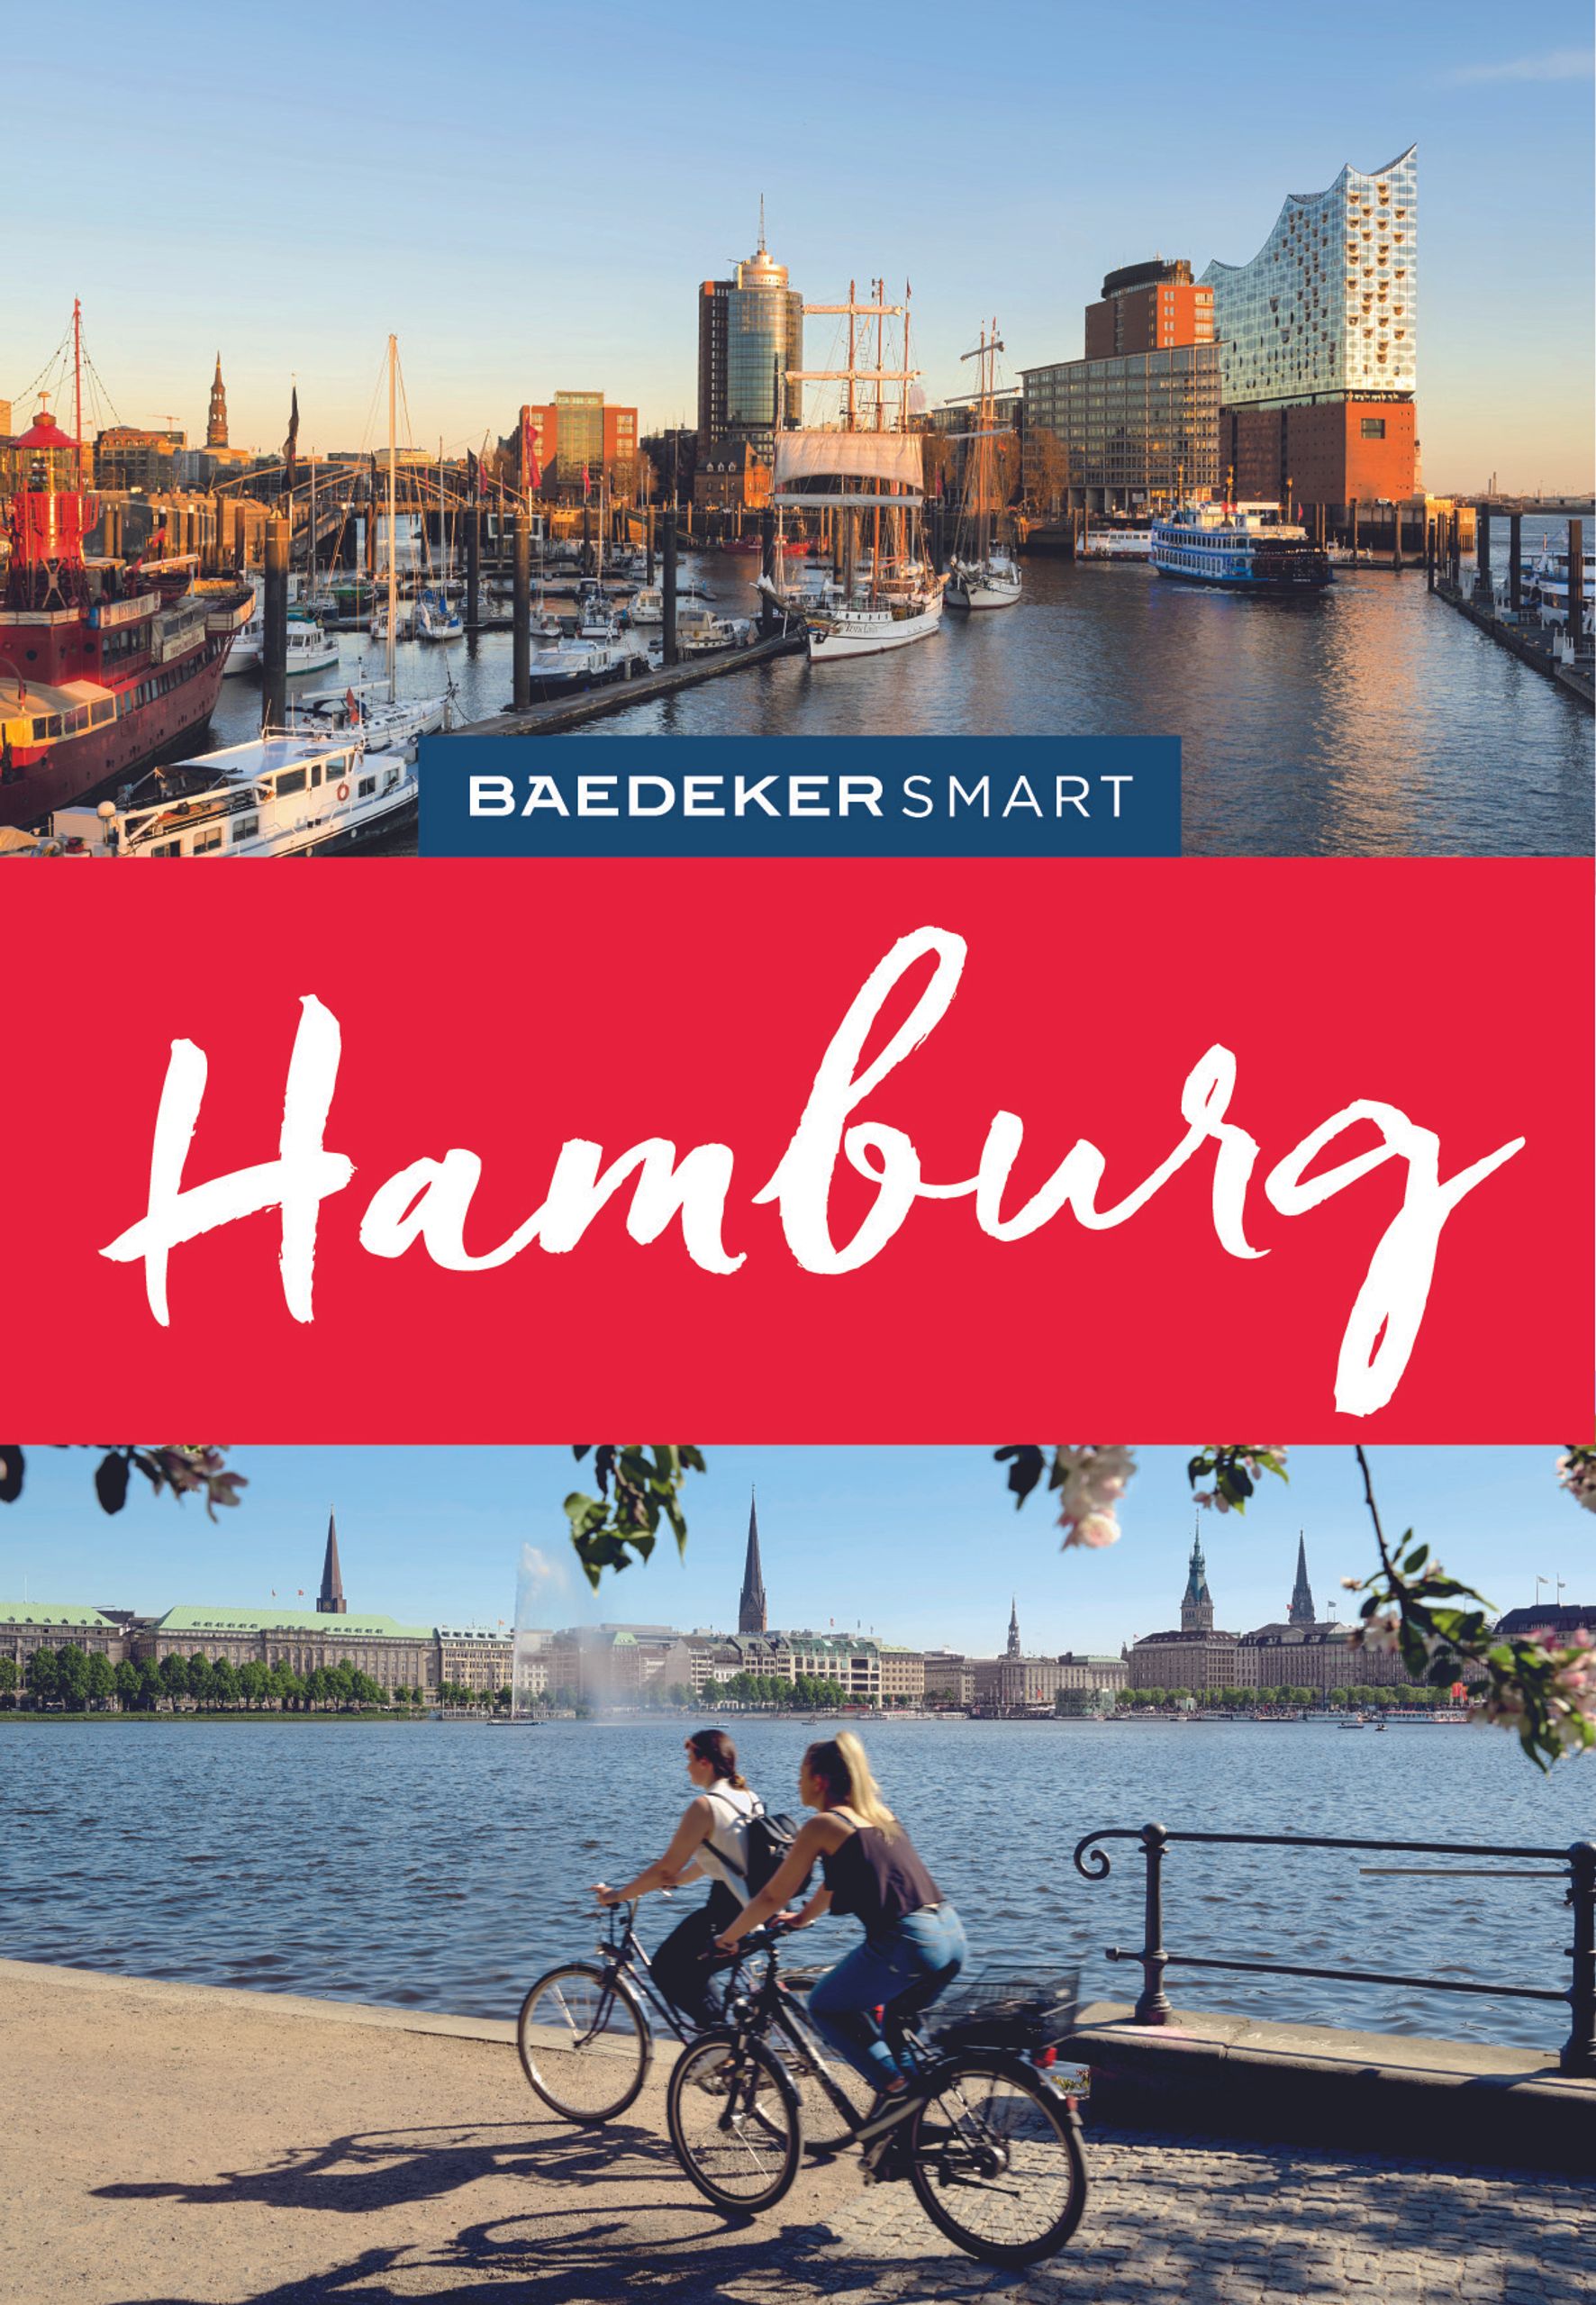 Baedeker Hamburg